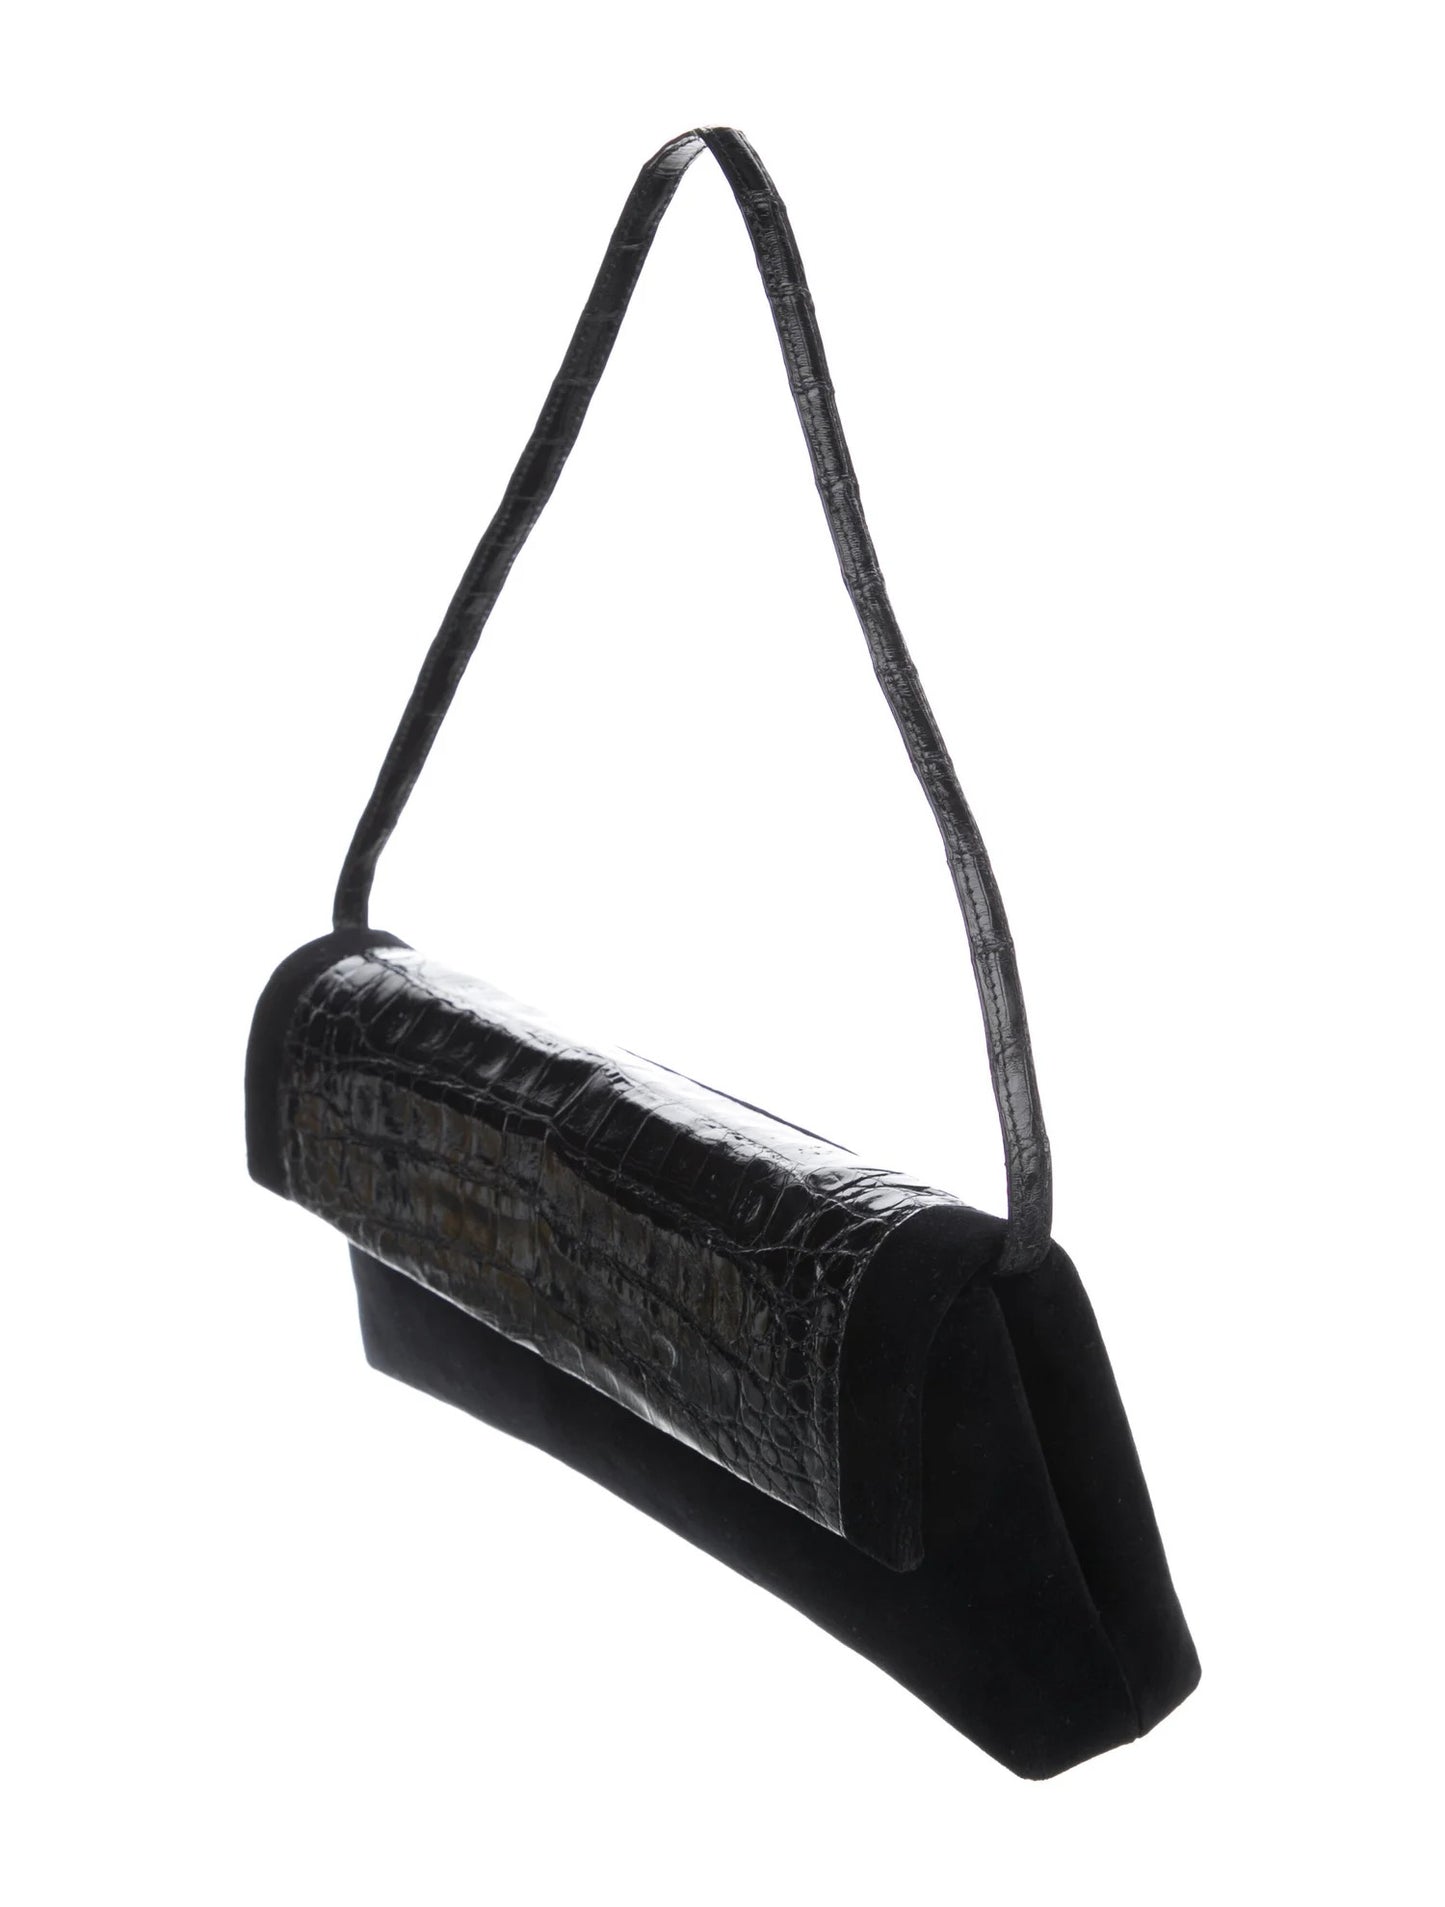 Nancy Gonzalez black crocodile leather shoulder bag